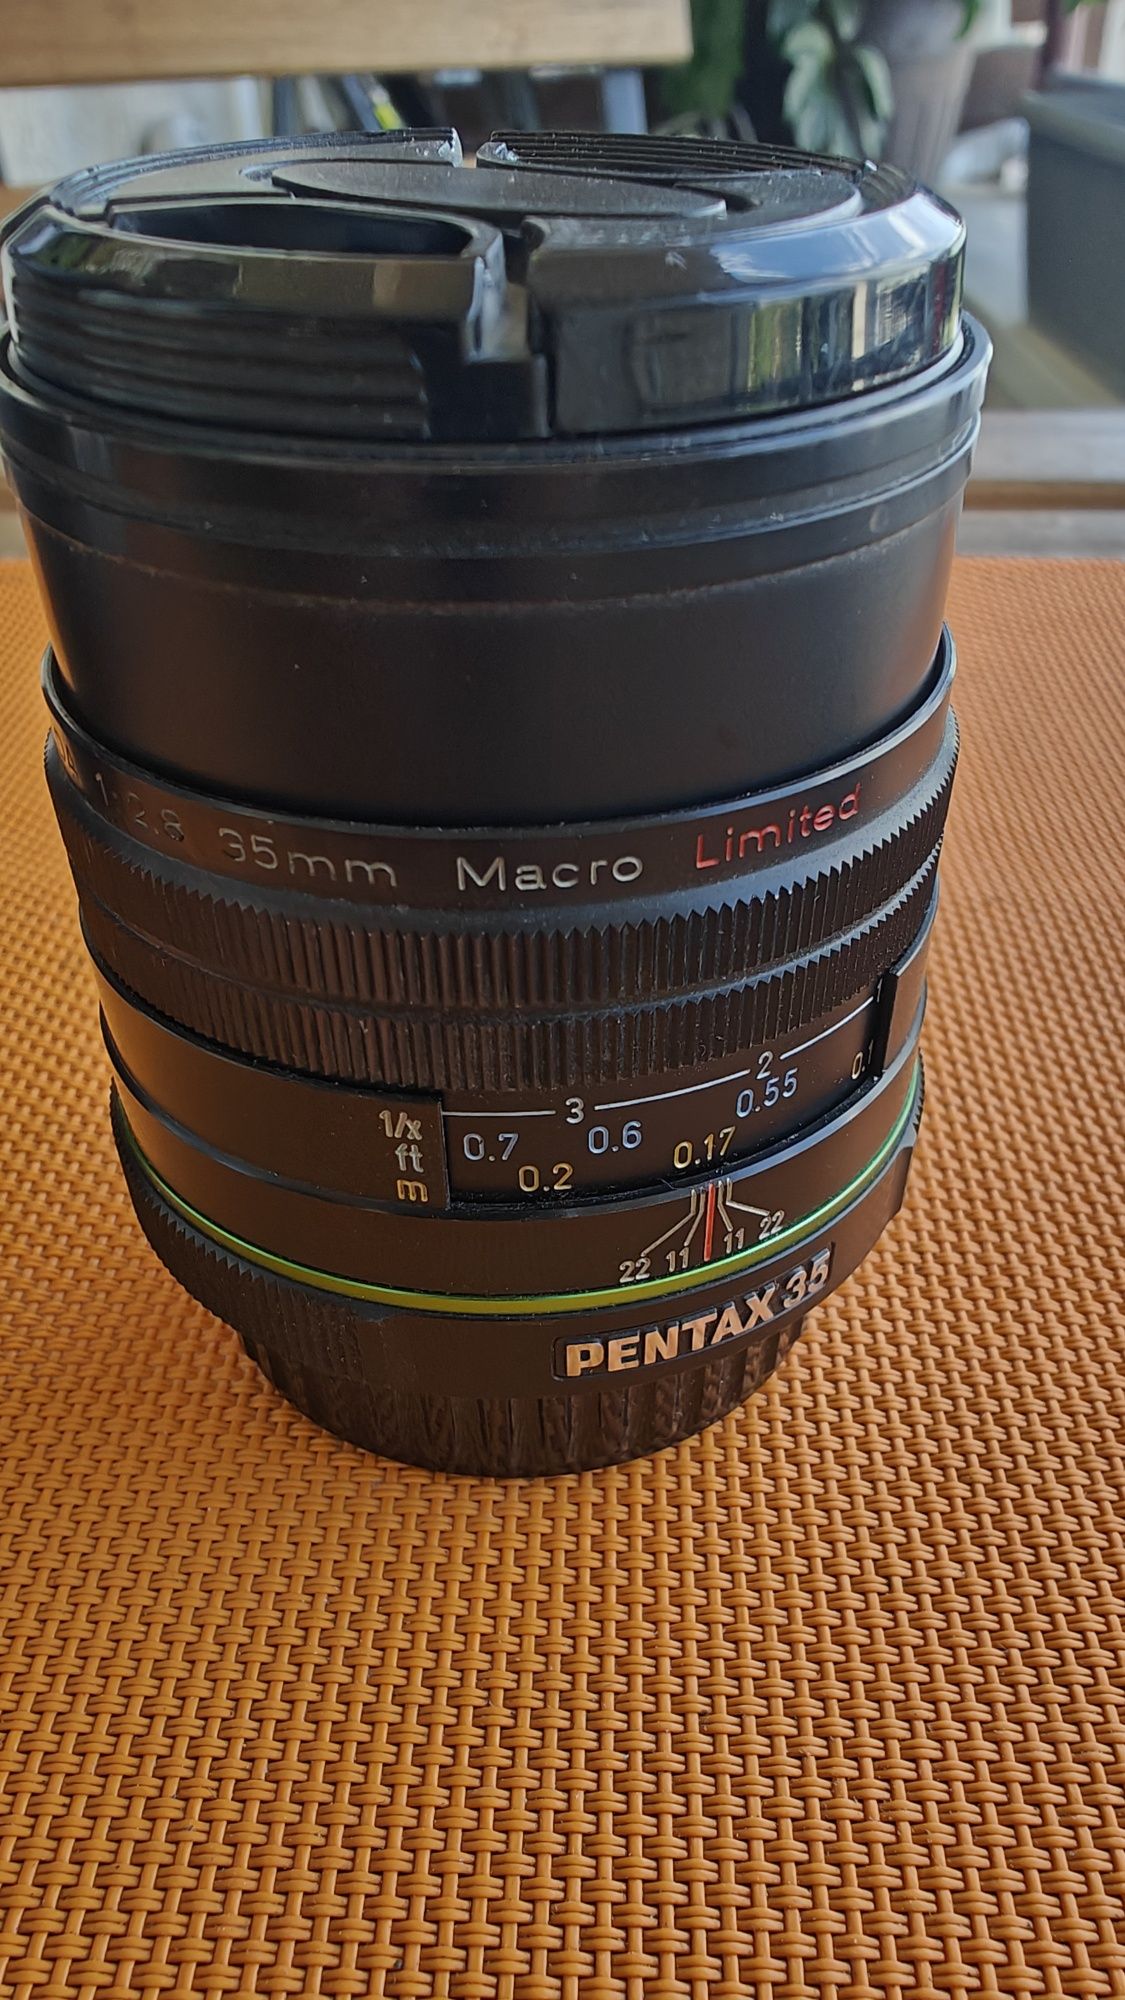 Pentax DA 35mm f/2.8 SMC Macro Limited